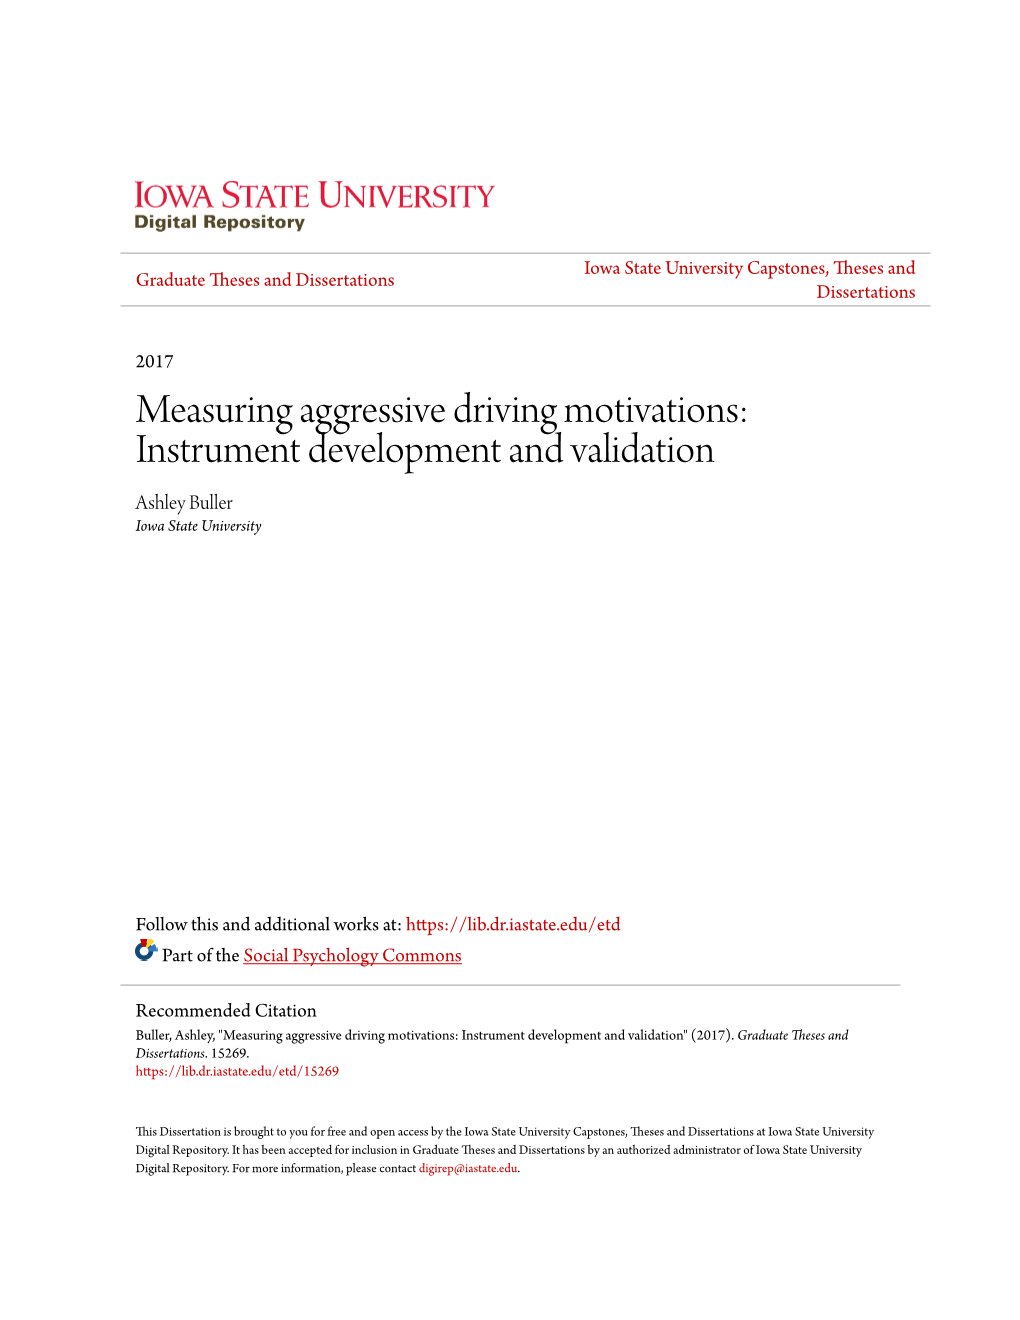 Measuring Aggressive Driving Motivations: Instrument Development and Validation Ashley Buller Iowa State University